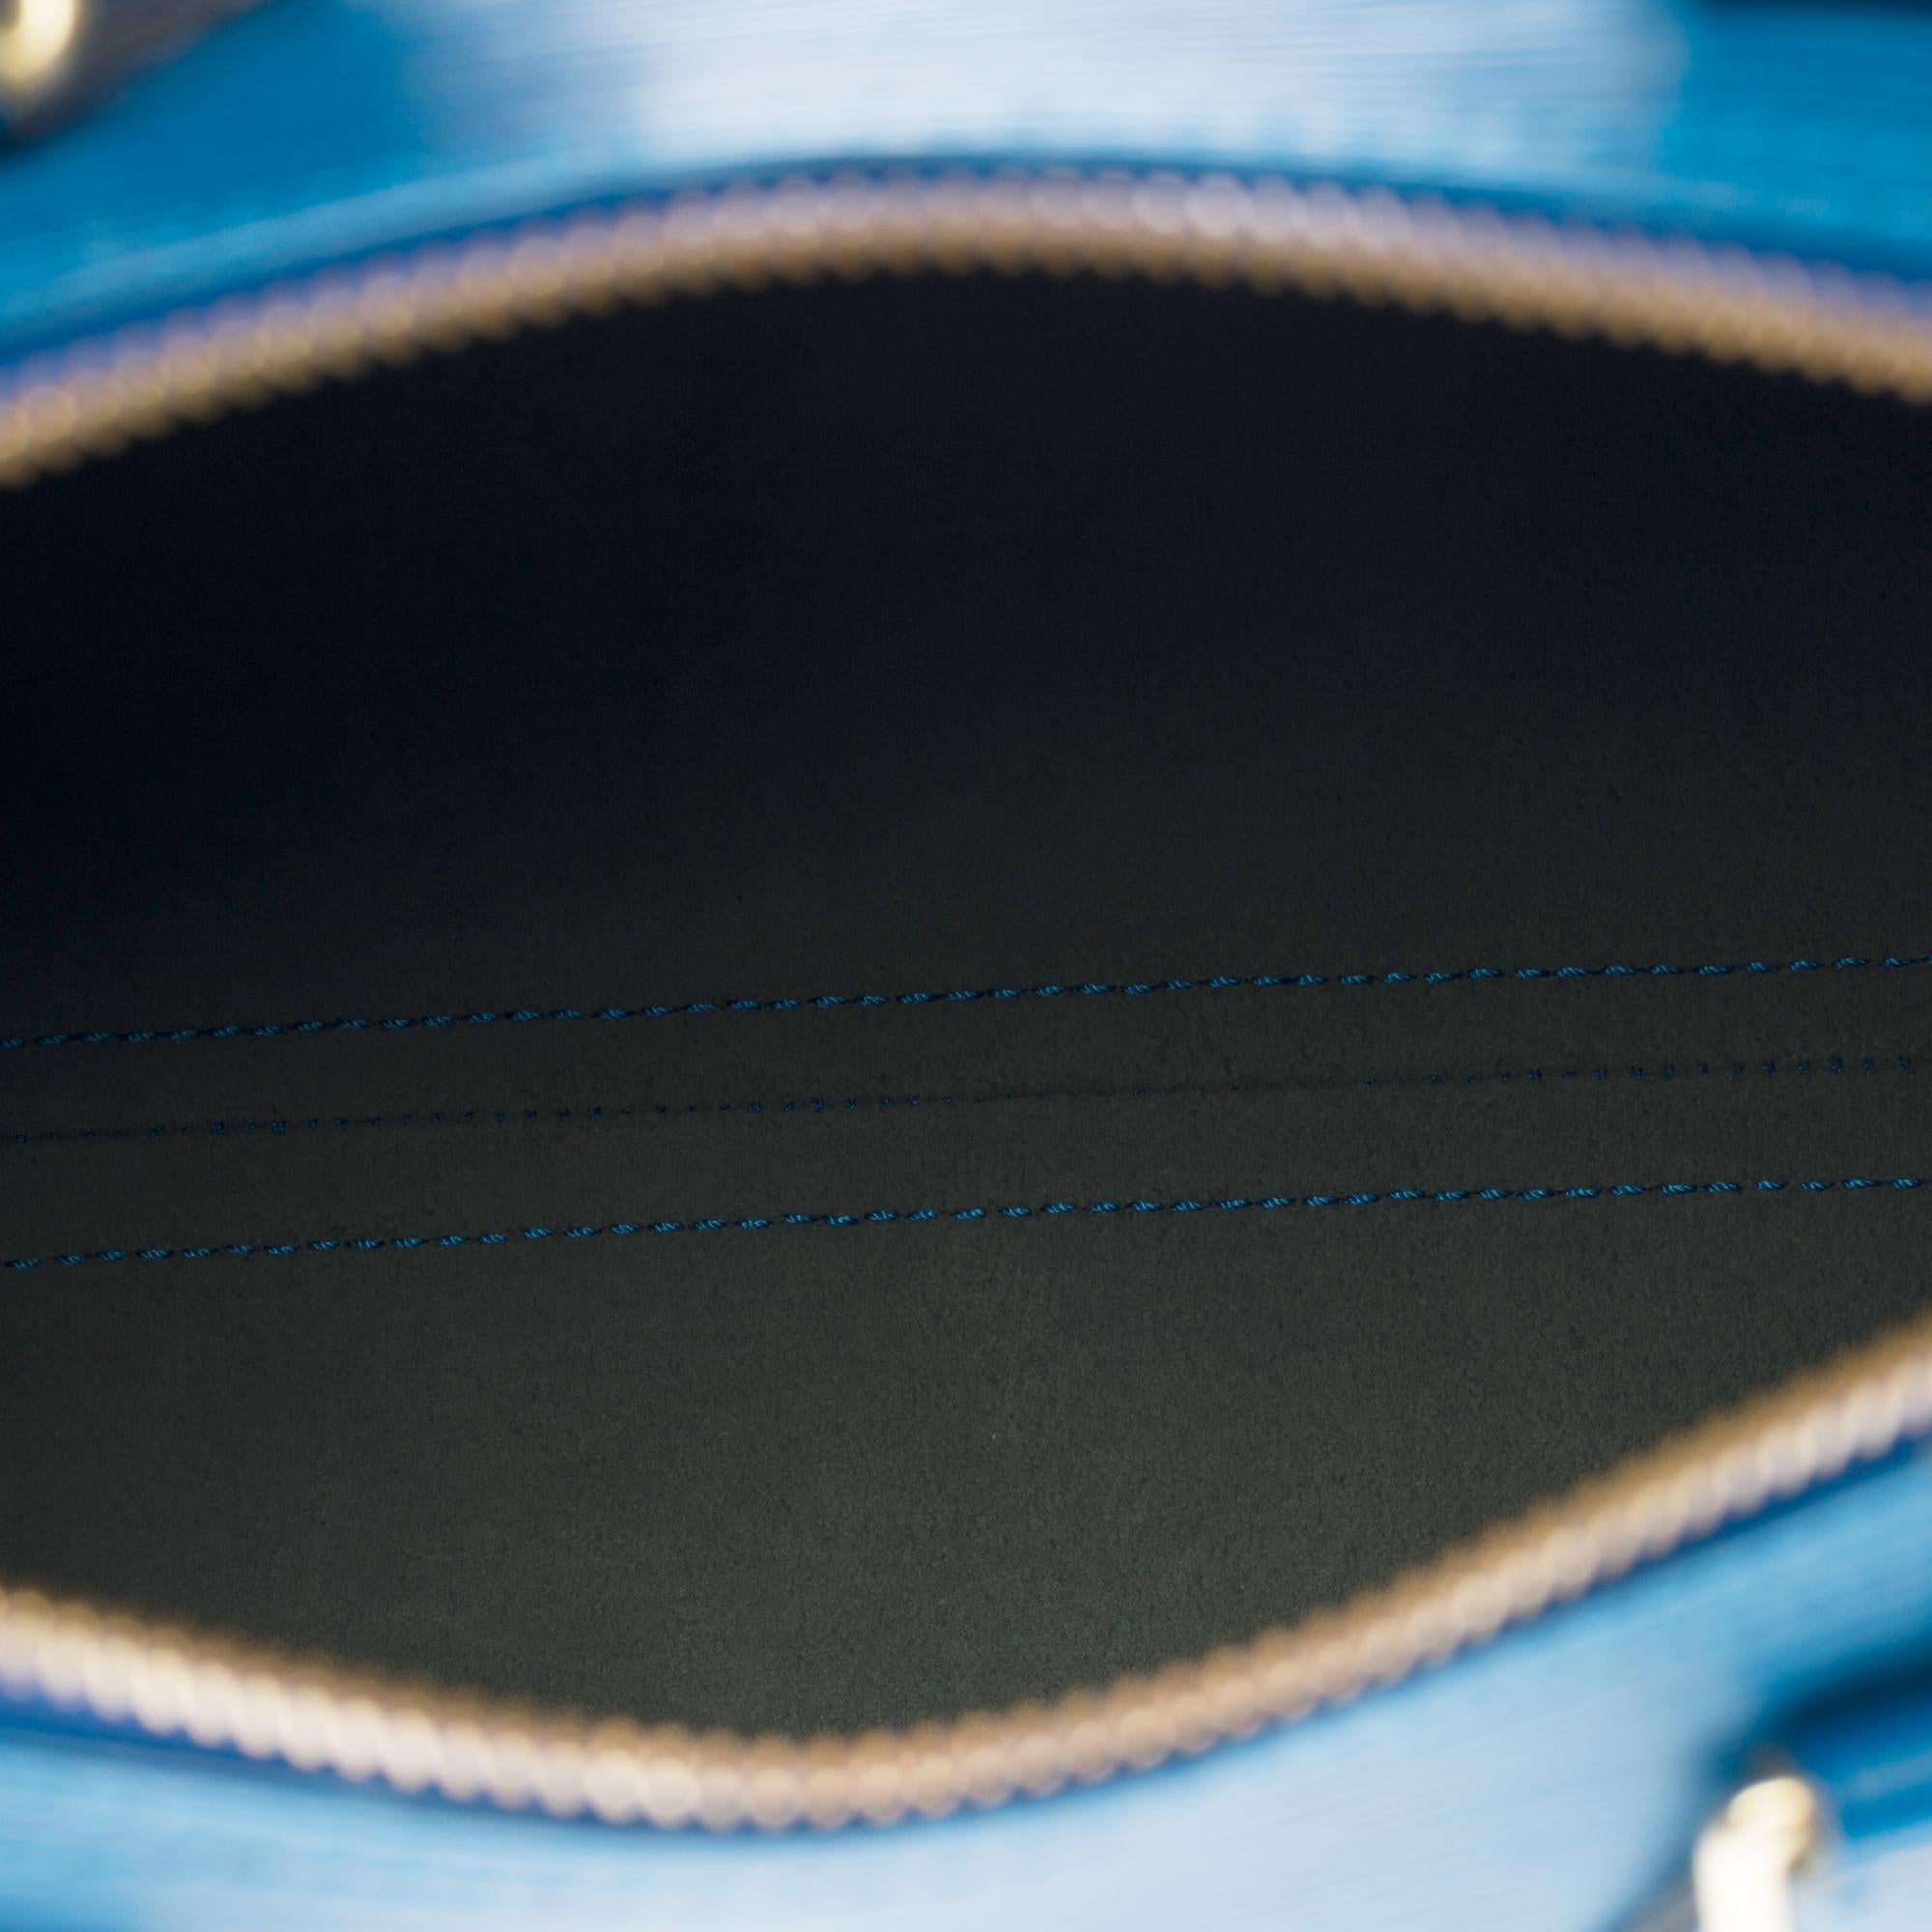 Women's Louis Vuitton Speedy 30 handbag in blue épi leather and gold hardware